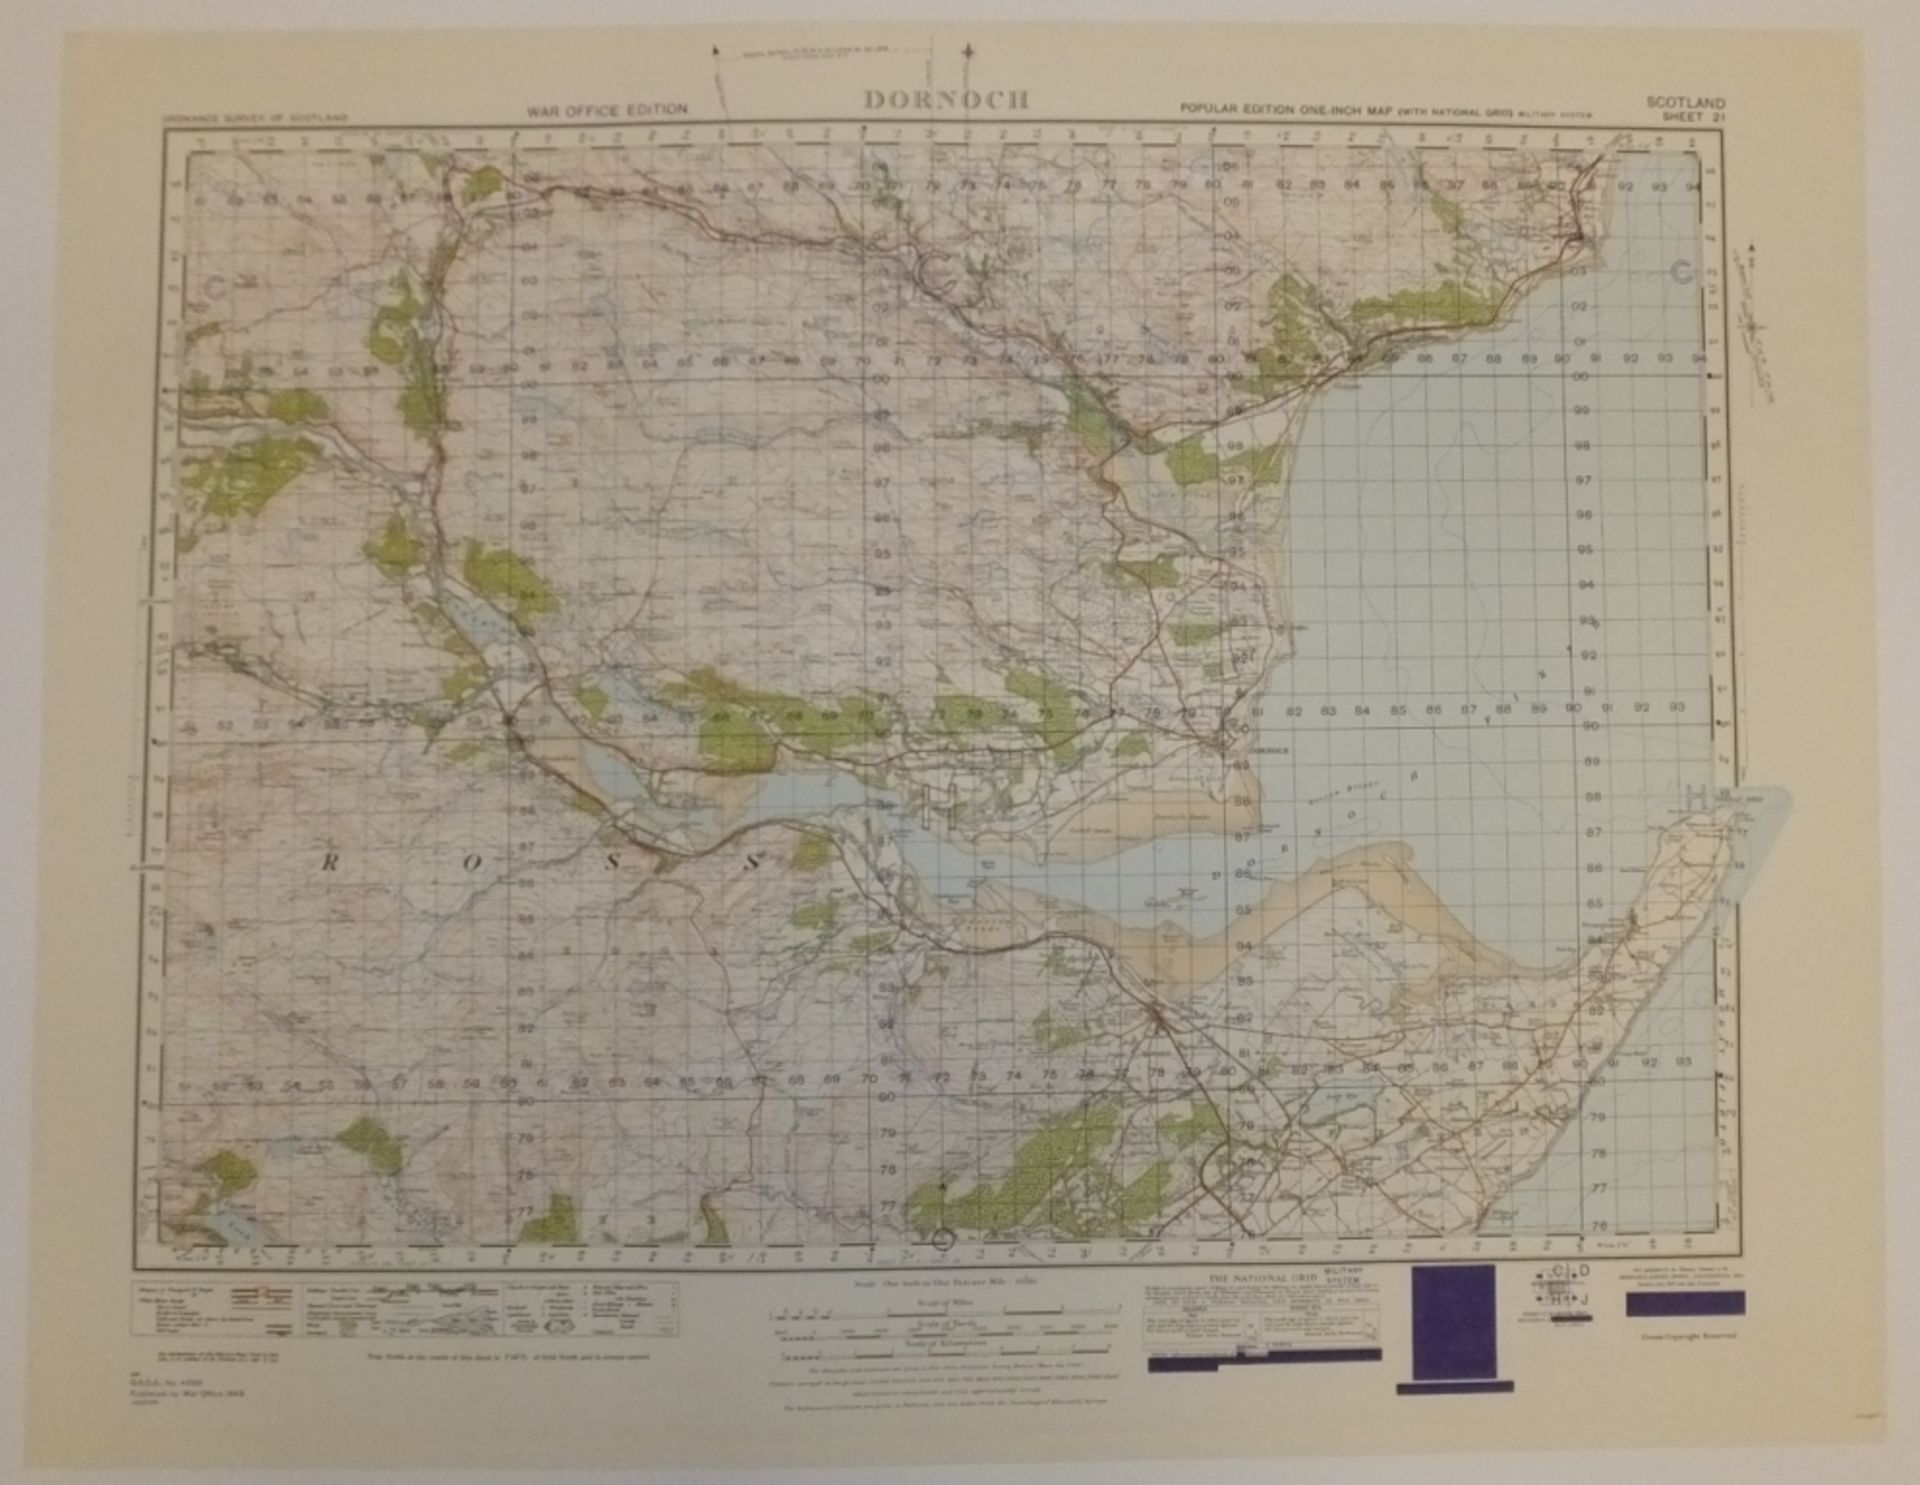 29x SCOTLAND MAP DORNOCH 1INCH 1MILE 1949 POPULAR EDITION 4639GSGS SHEET 21